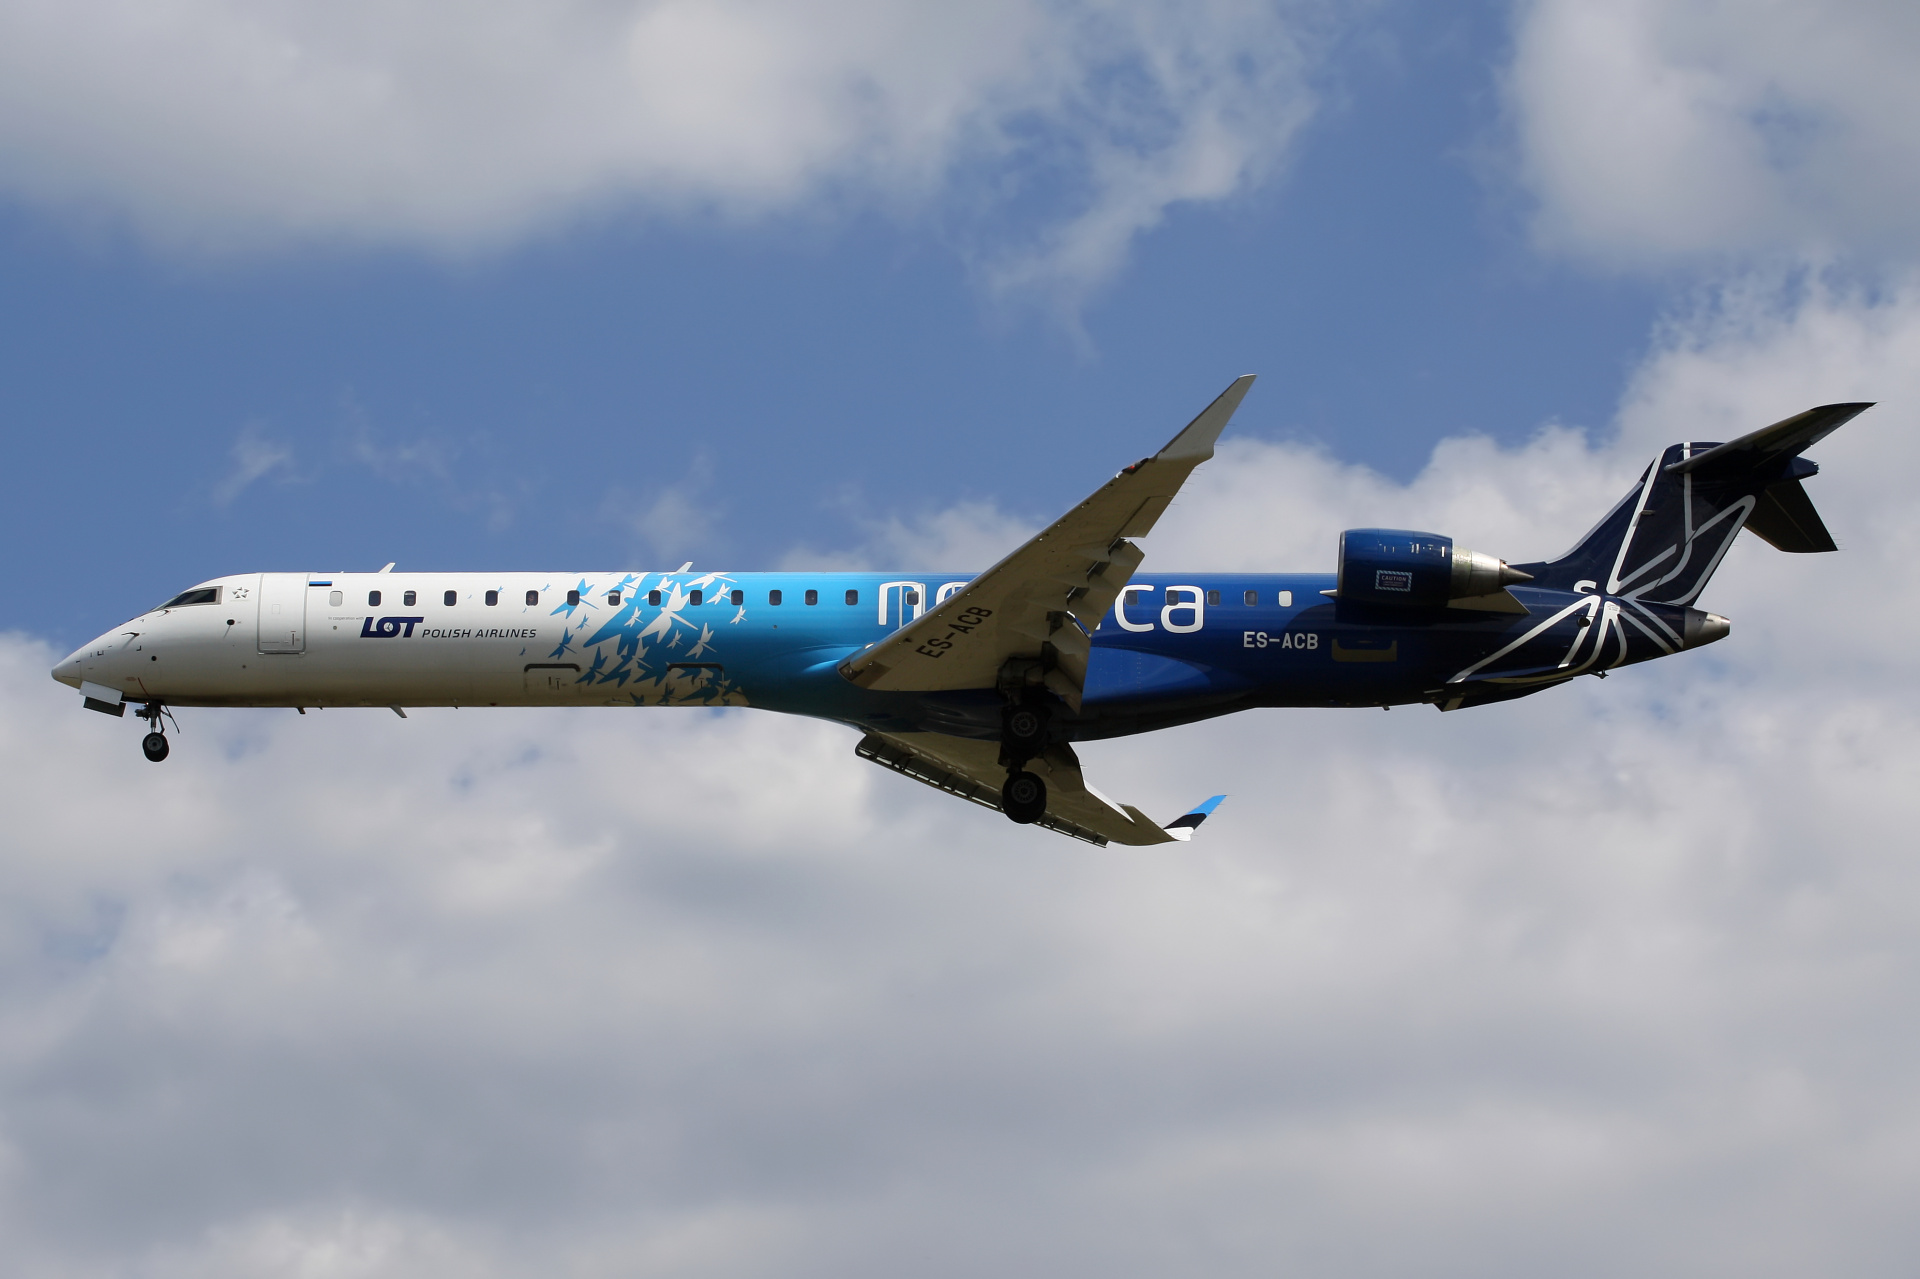 ES-ACB (LOT Polish Airlines) (Aircraft » EPWA Spotting » Mitsubishi Regional Jet » CRJ-900 » Nordica)